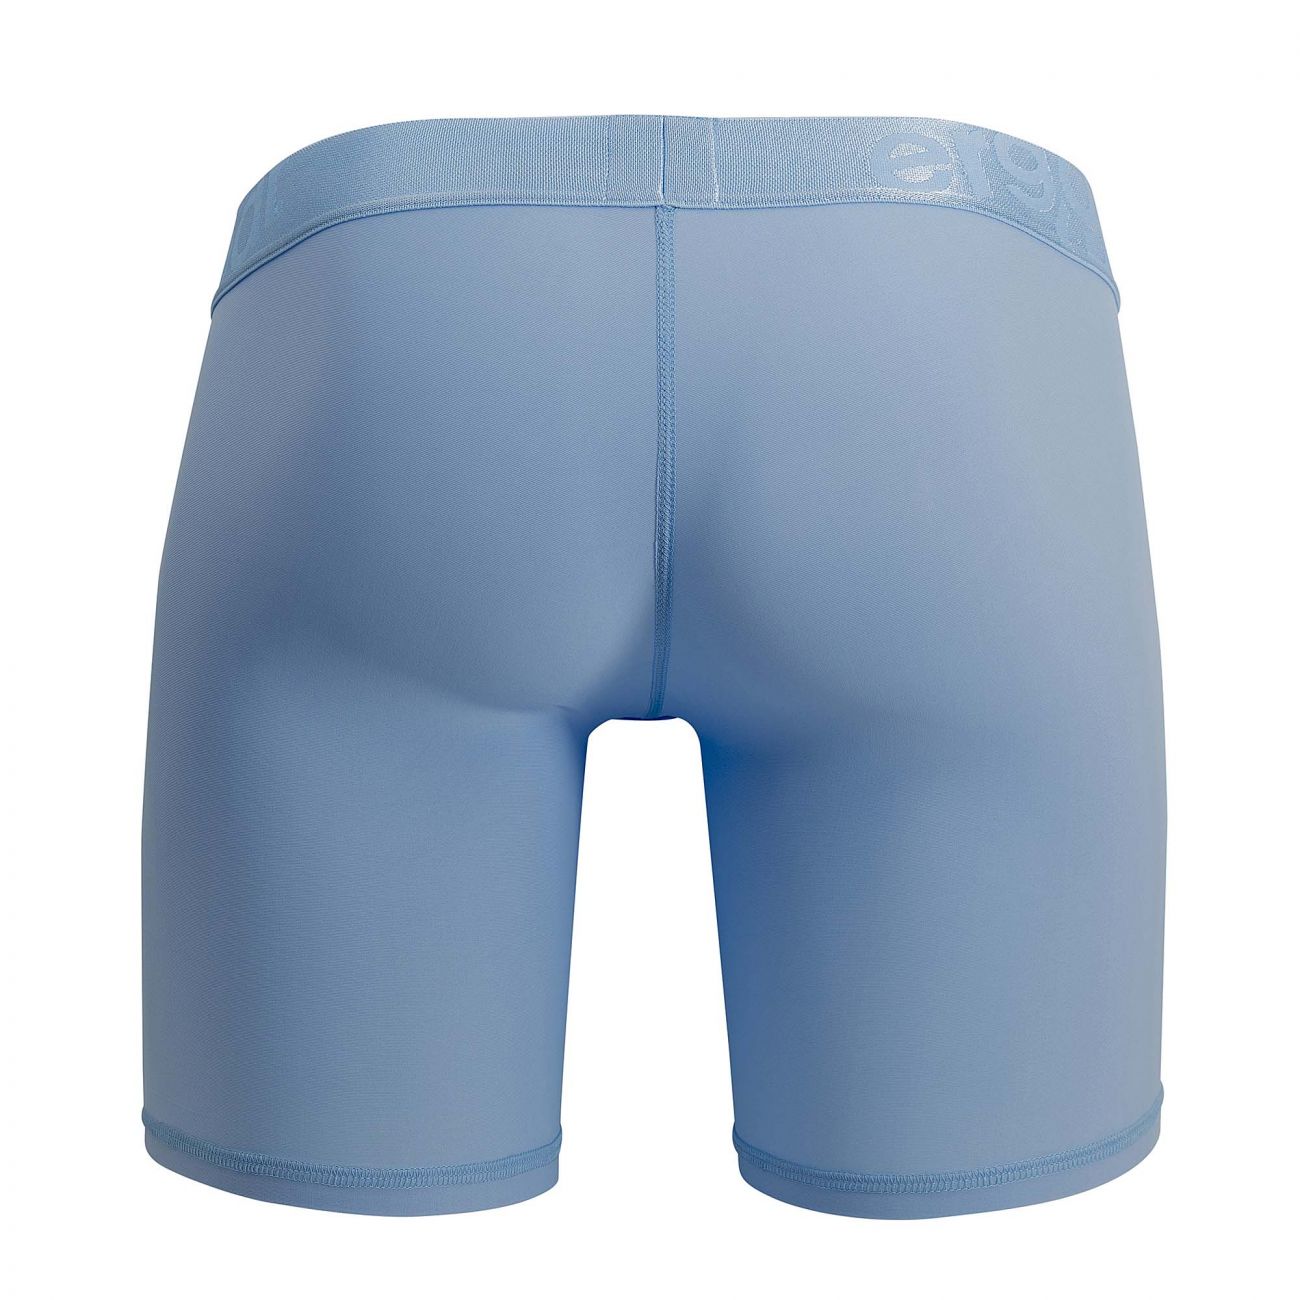 Mens Underwear: ErgoWear EW0989 FEEL XV Boxer Briefs | eBay